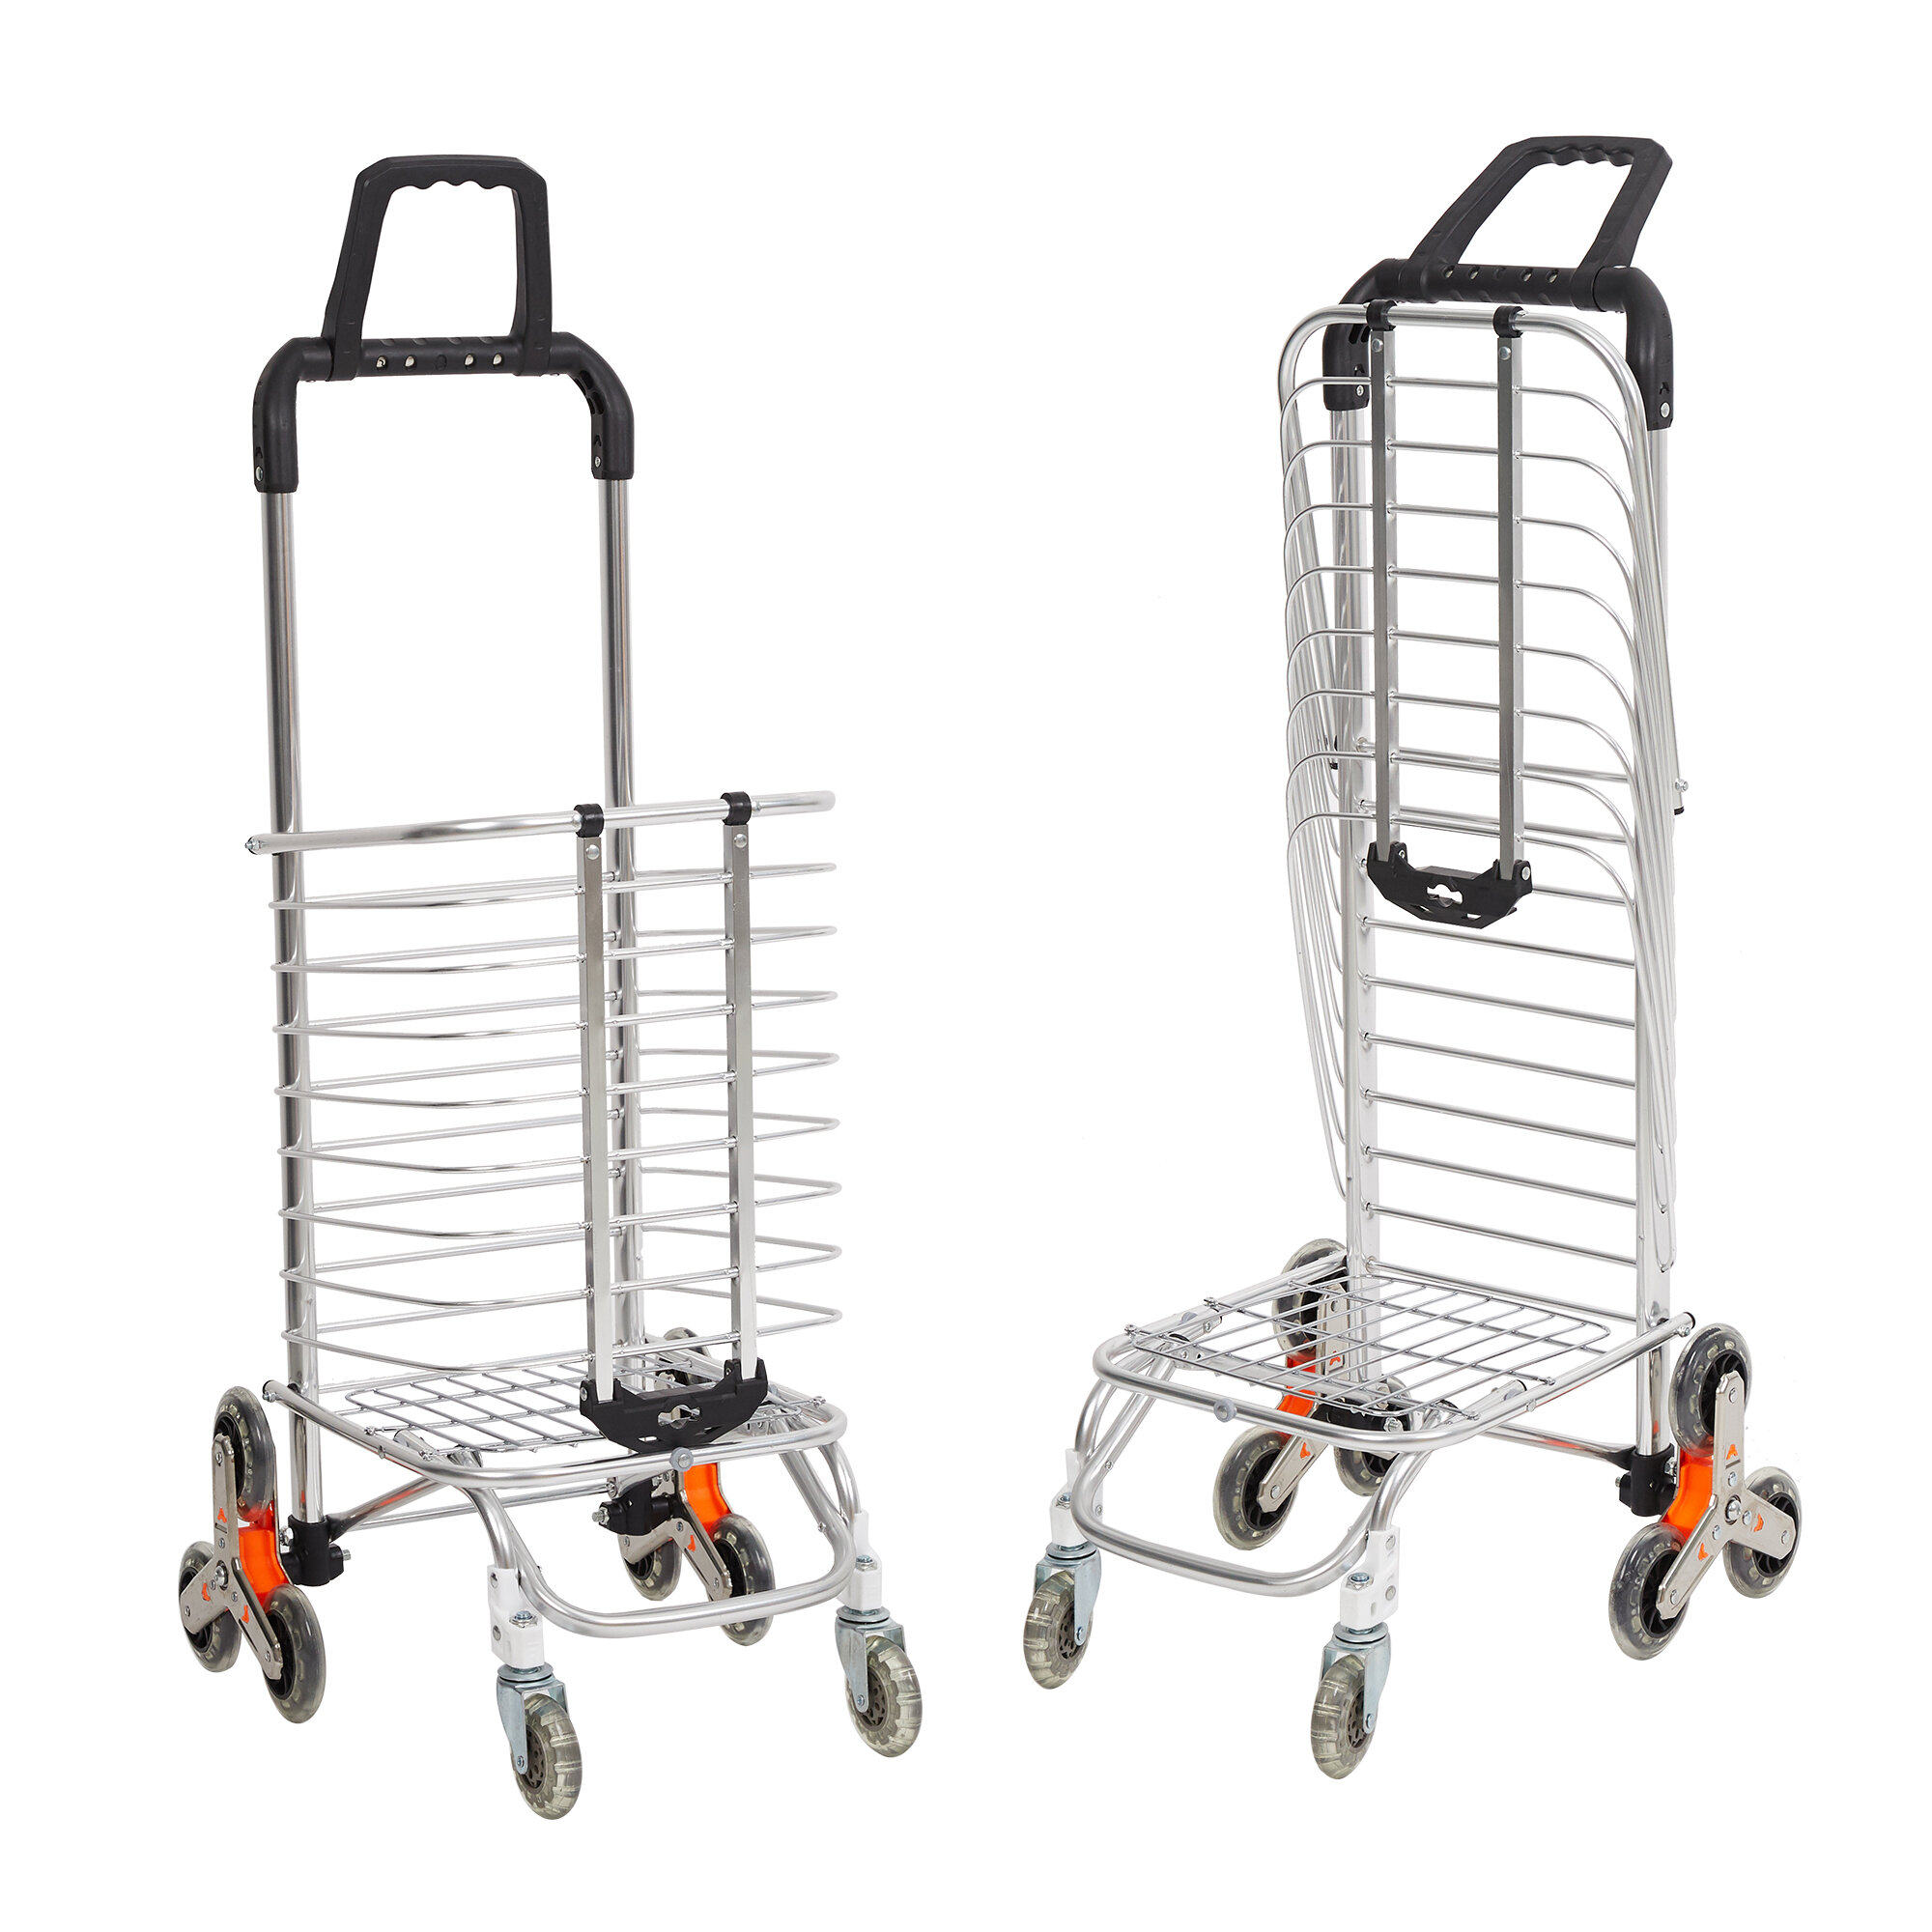 Playmarket Go Plus Large Capacity Folding Shopping Cart with Swivel Wheels Red 